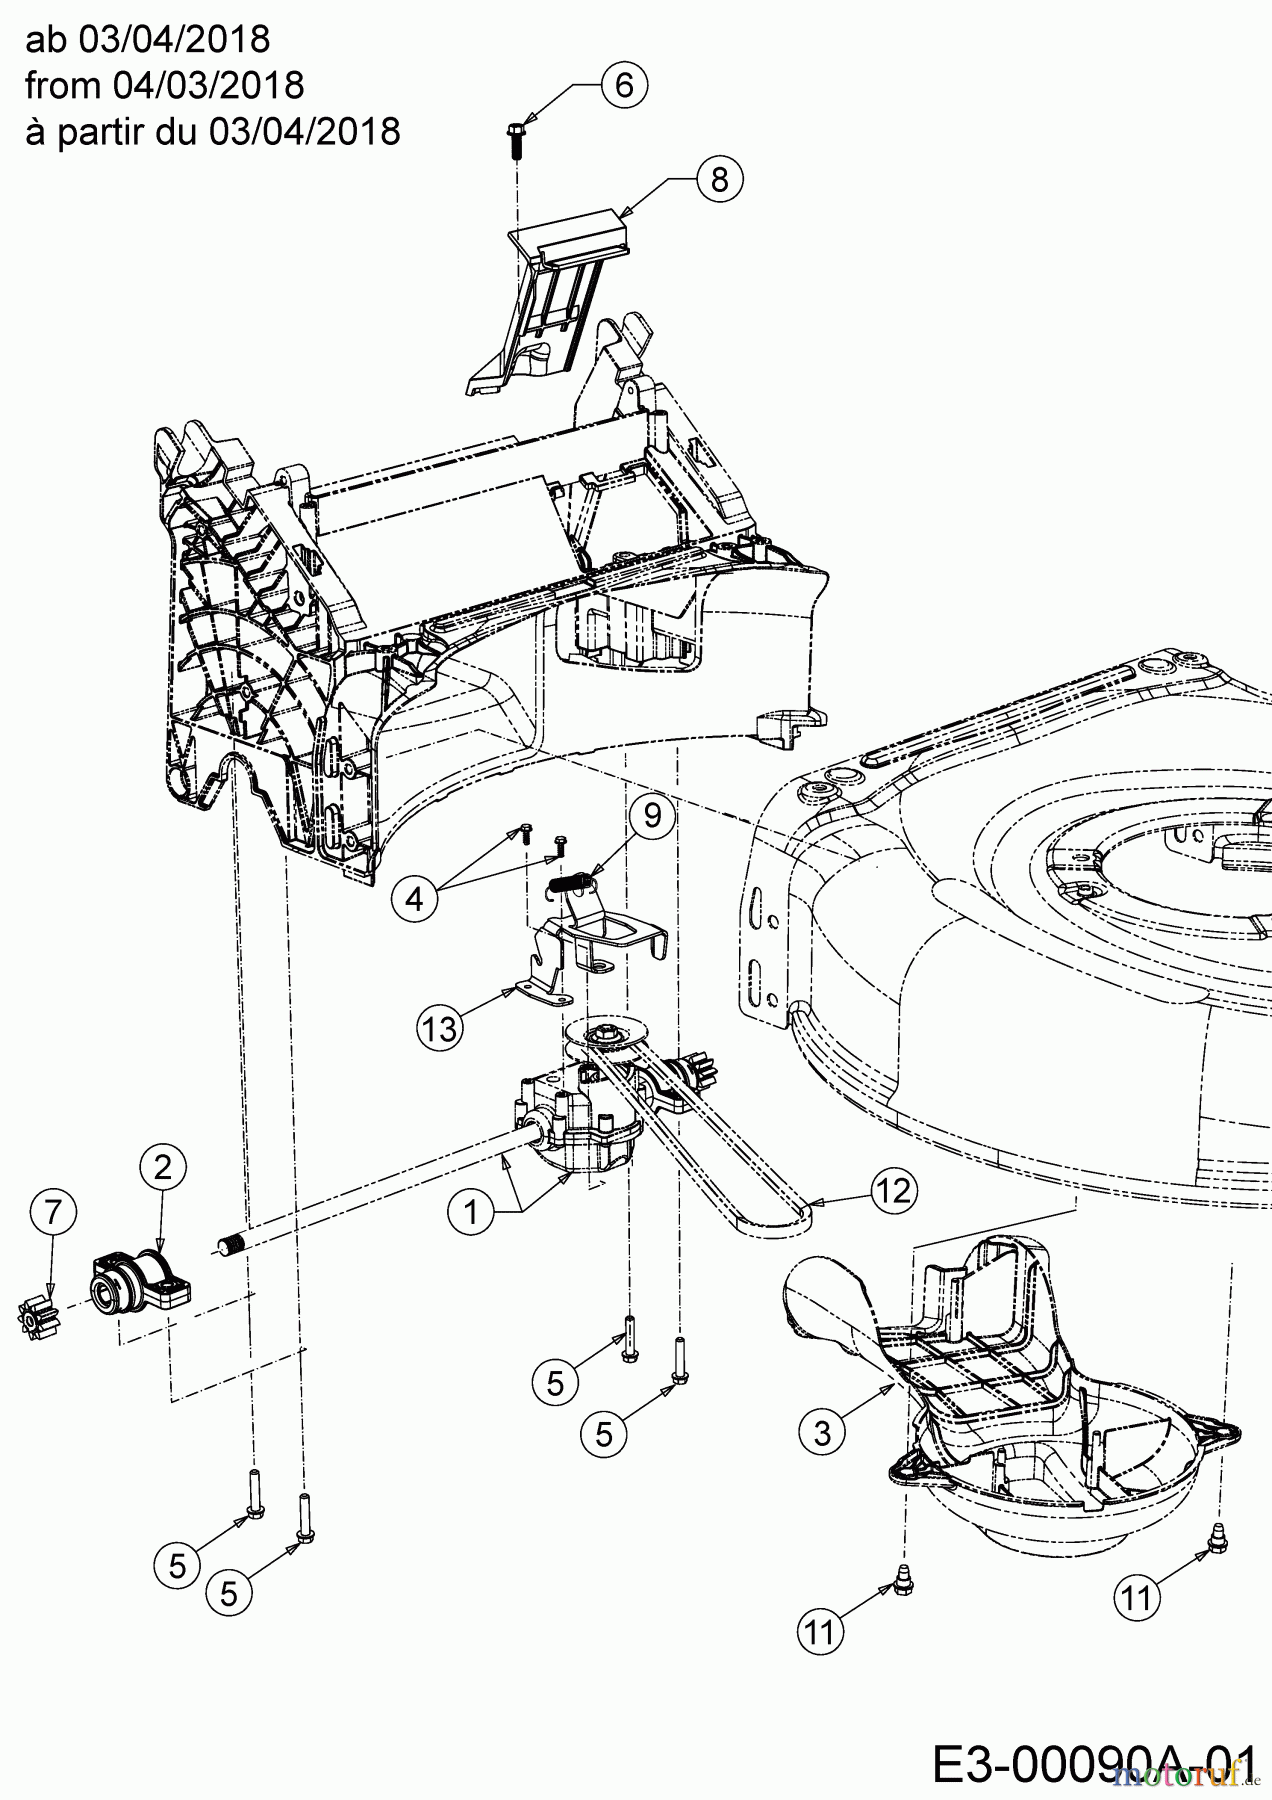  Mr.Gardener Petrol mower self propelled HW 53 BA-2 12B-PN7B629  (2020) Gearbox, Belt from 04/03/2018